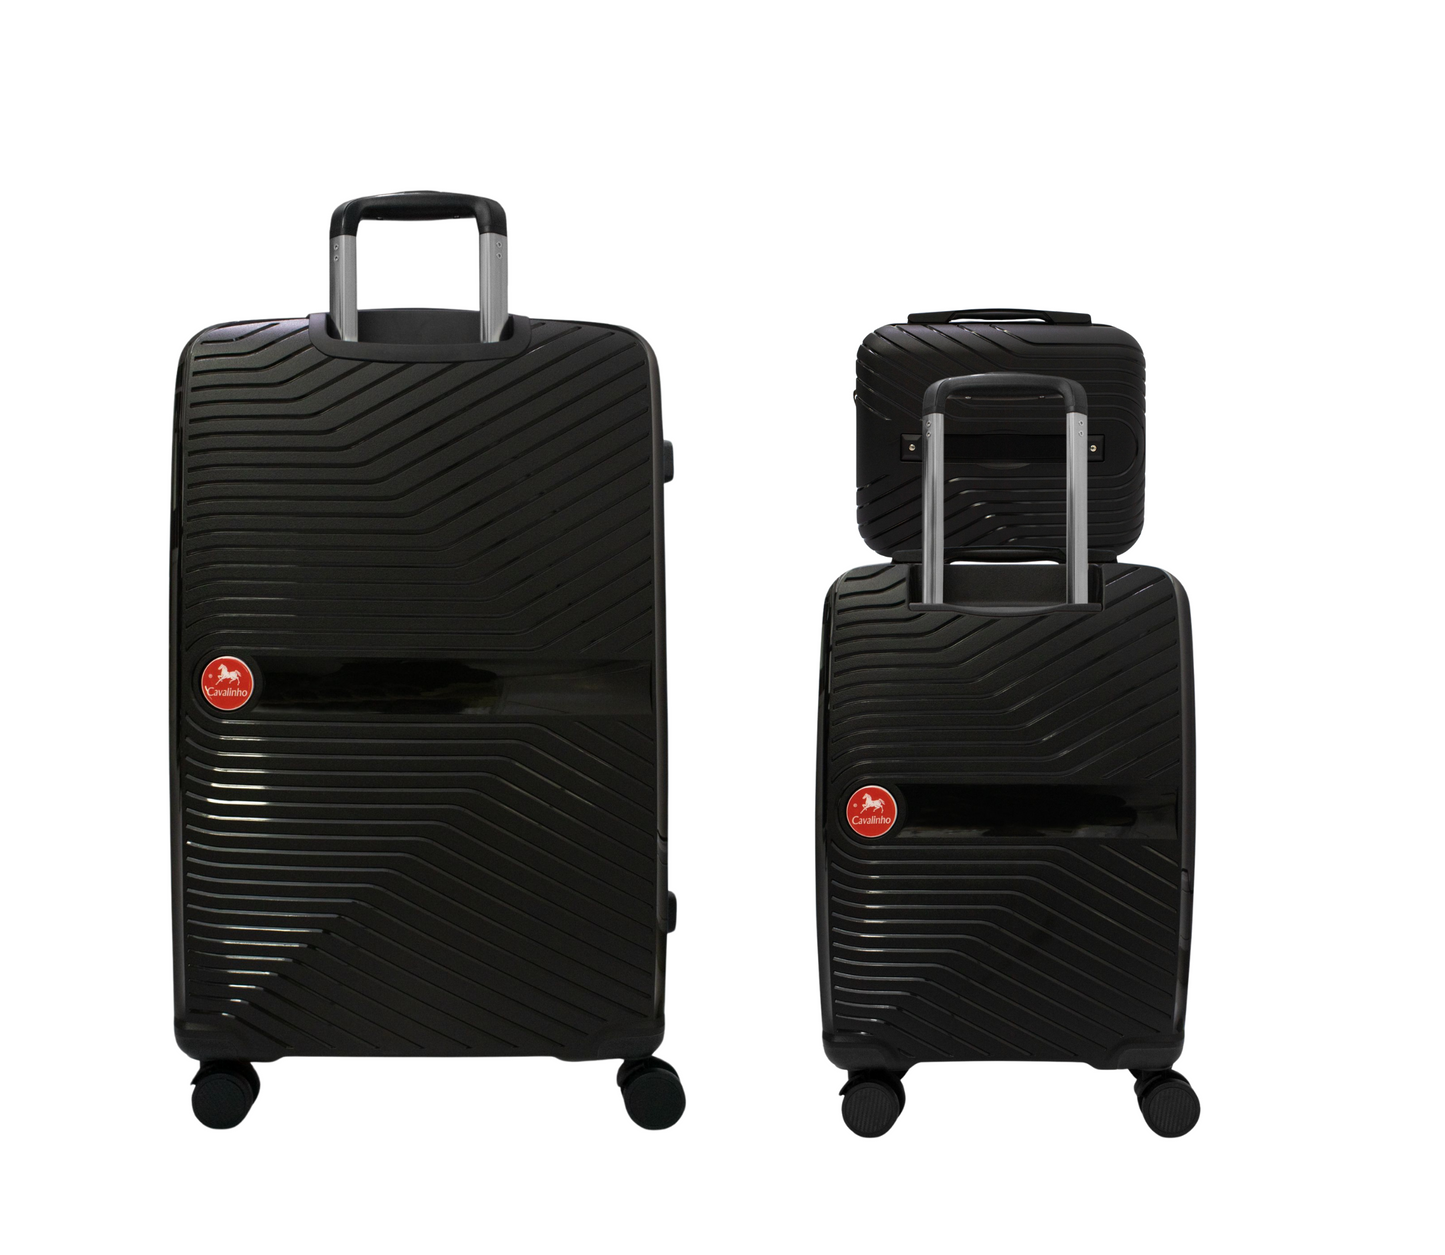 Cavalinho Canada & USA Colorful 3 Piece Luggage Set (15", 19" & 28") - Black Black Black - 68020004.010101.S151928._3